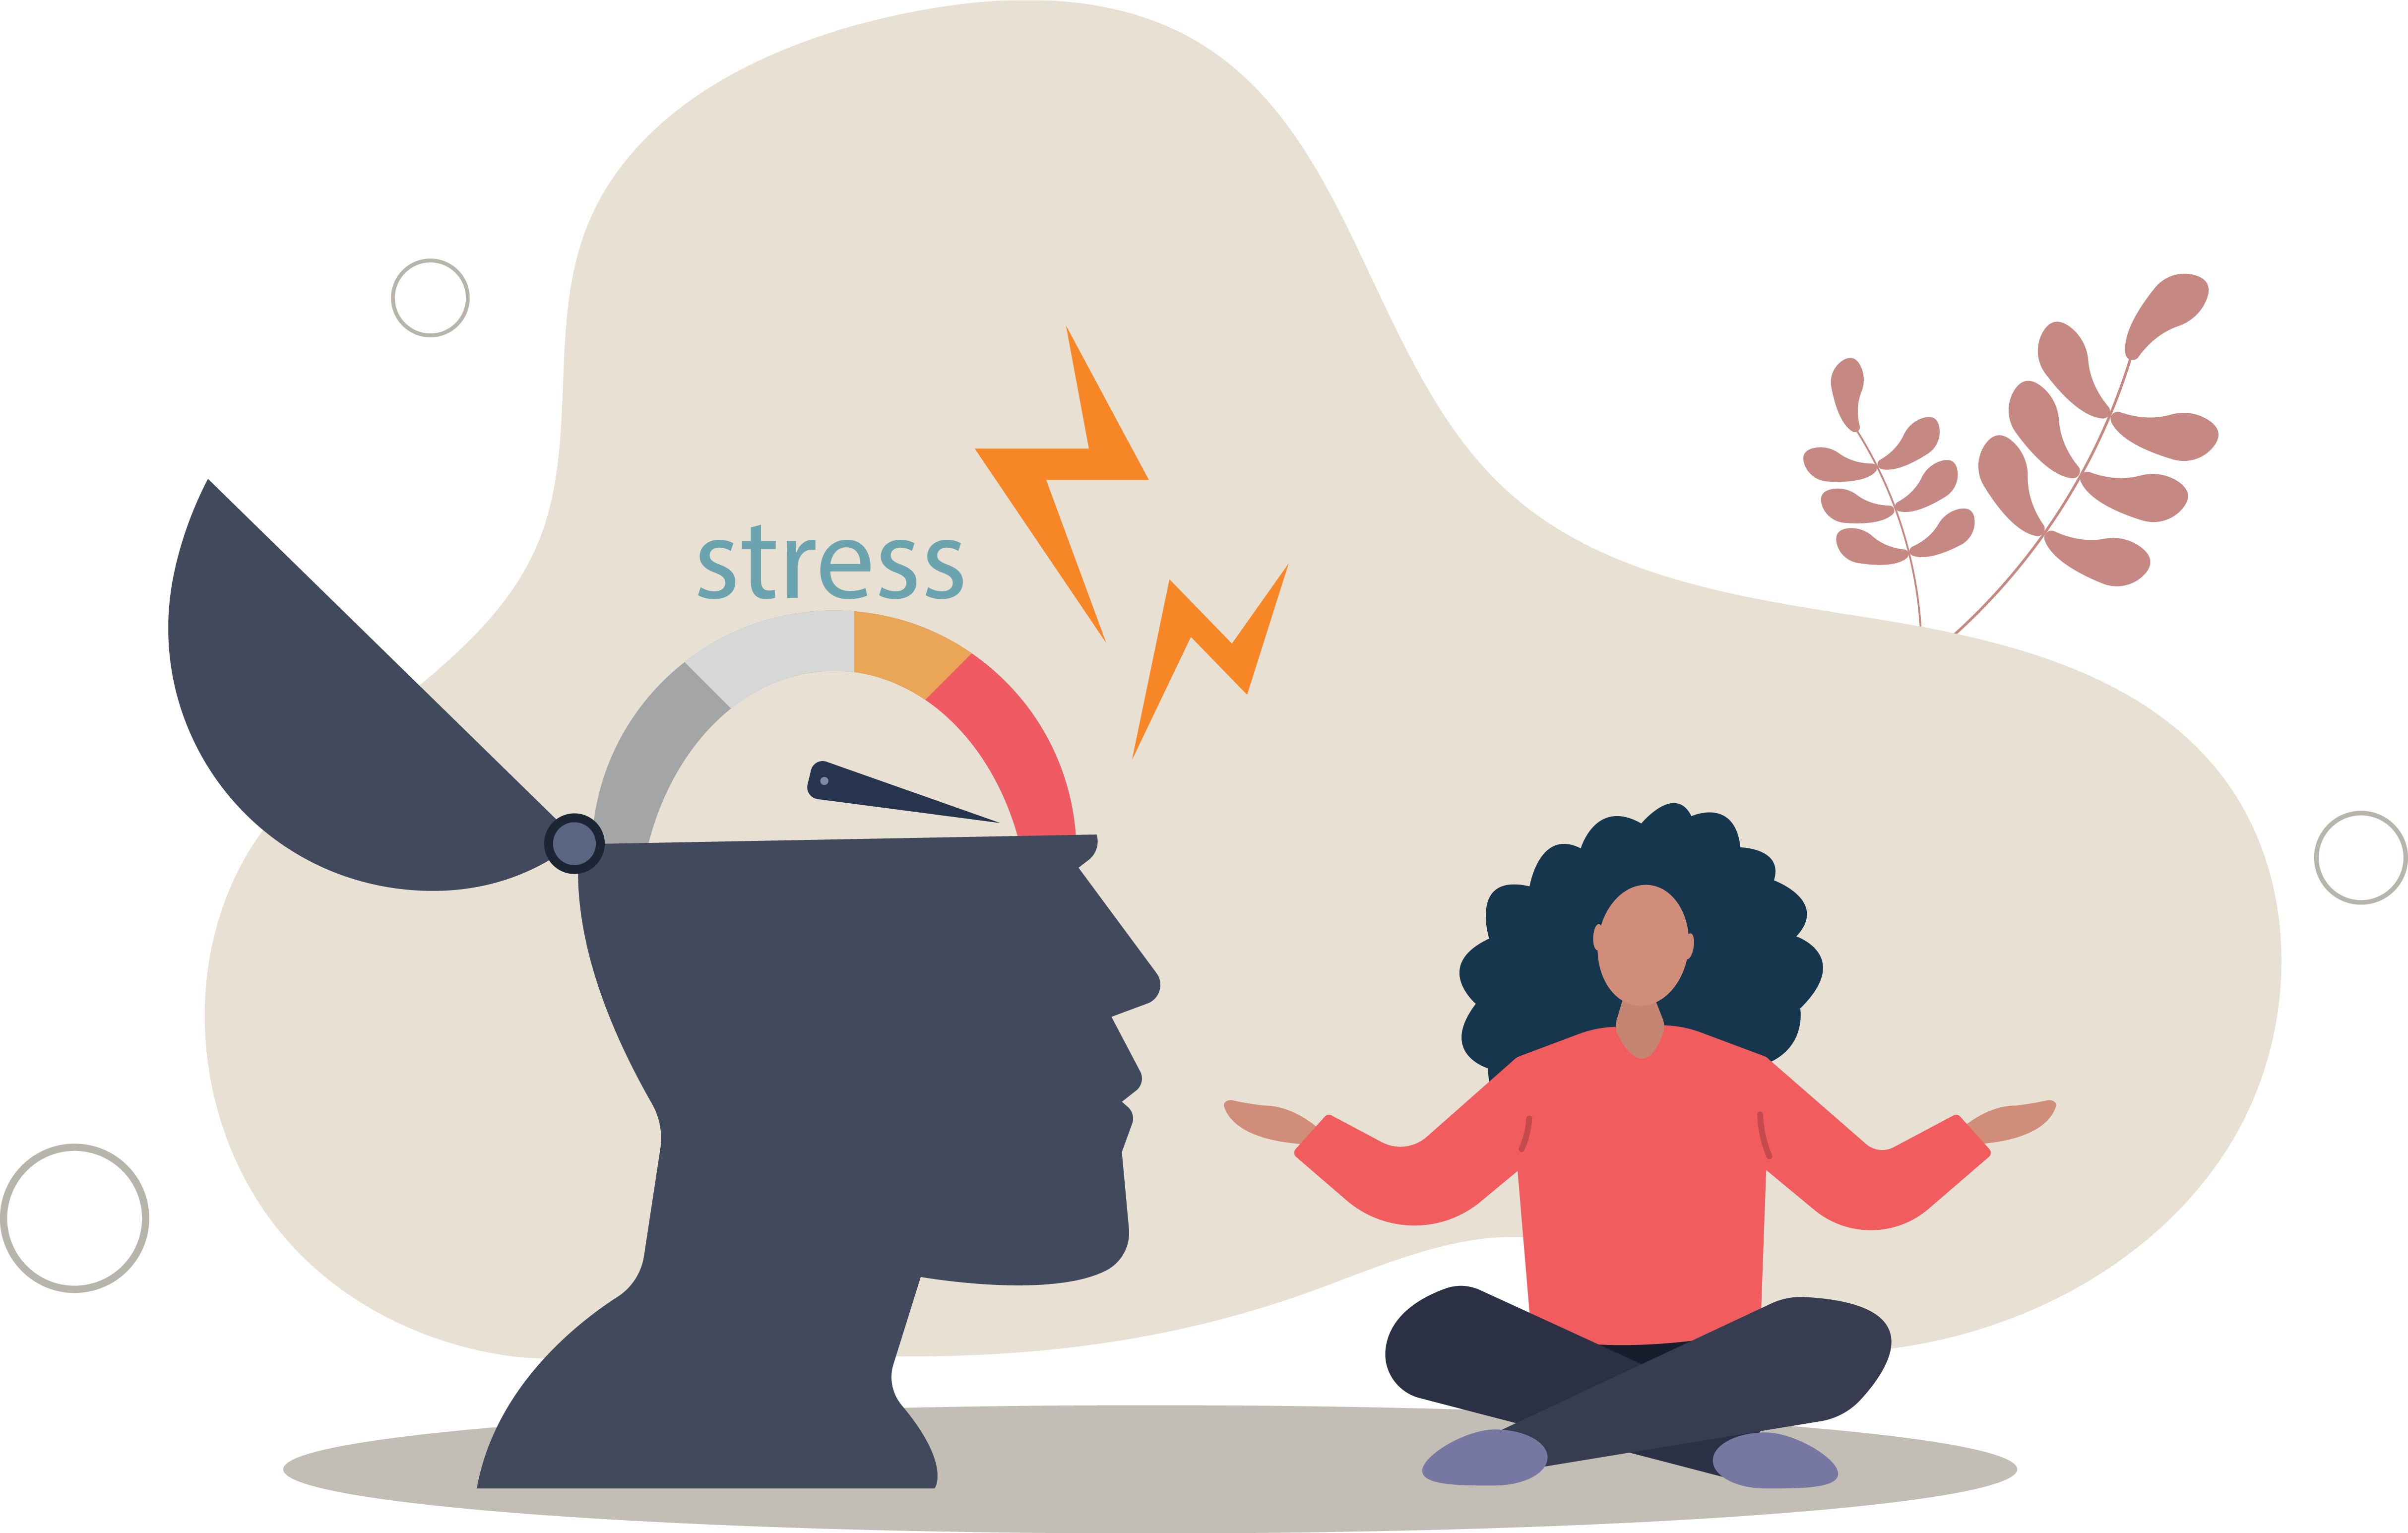 Stress management techniques for neurodivergent individuals